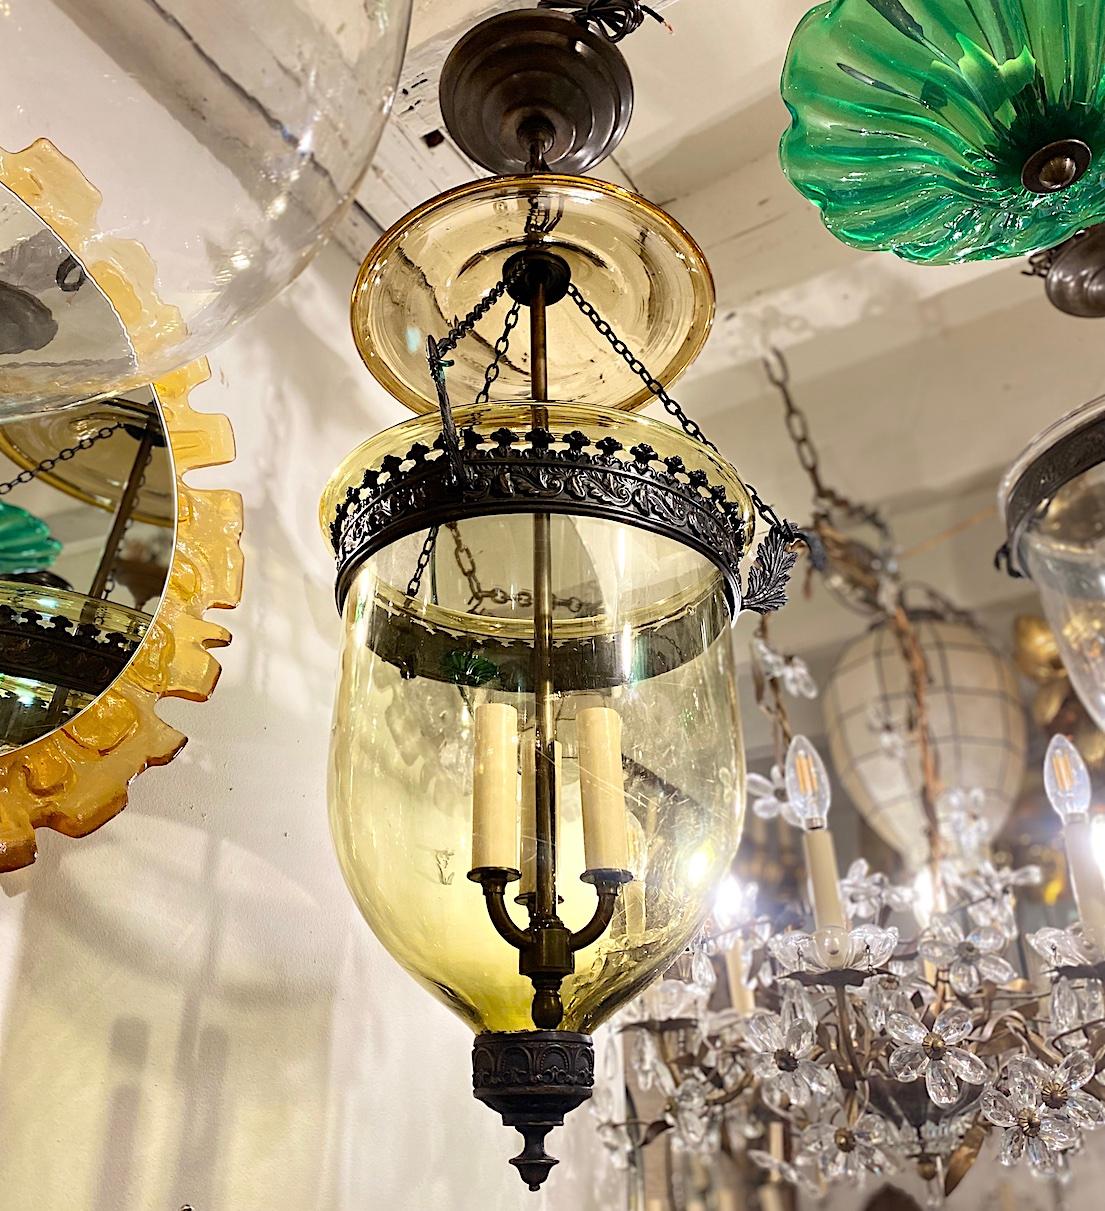 A circa 1900 English patinated bronze glass lantern with 3 interior lights.

Measurements:
Drop: 30